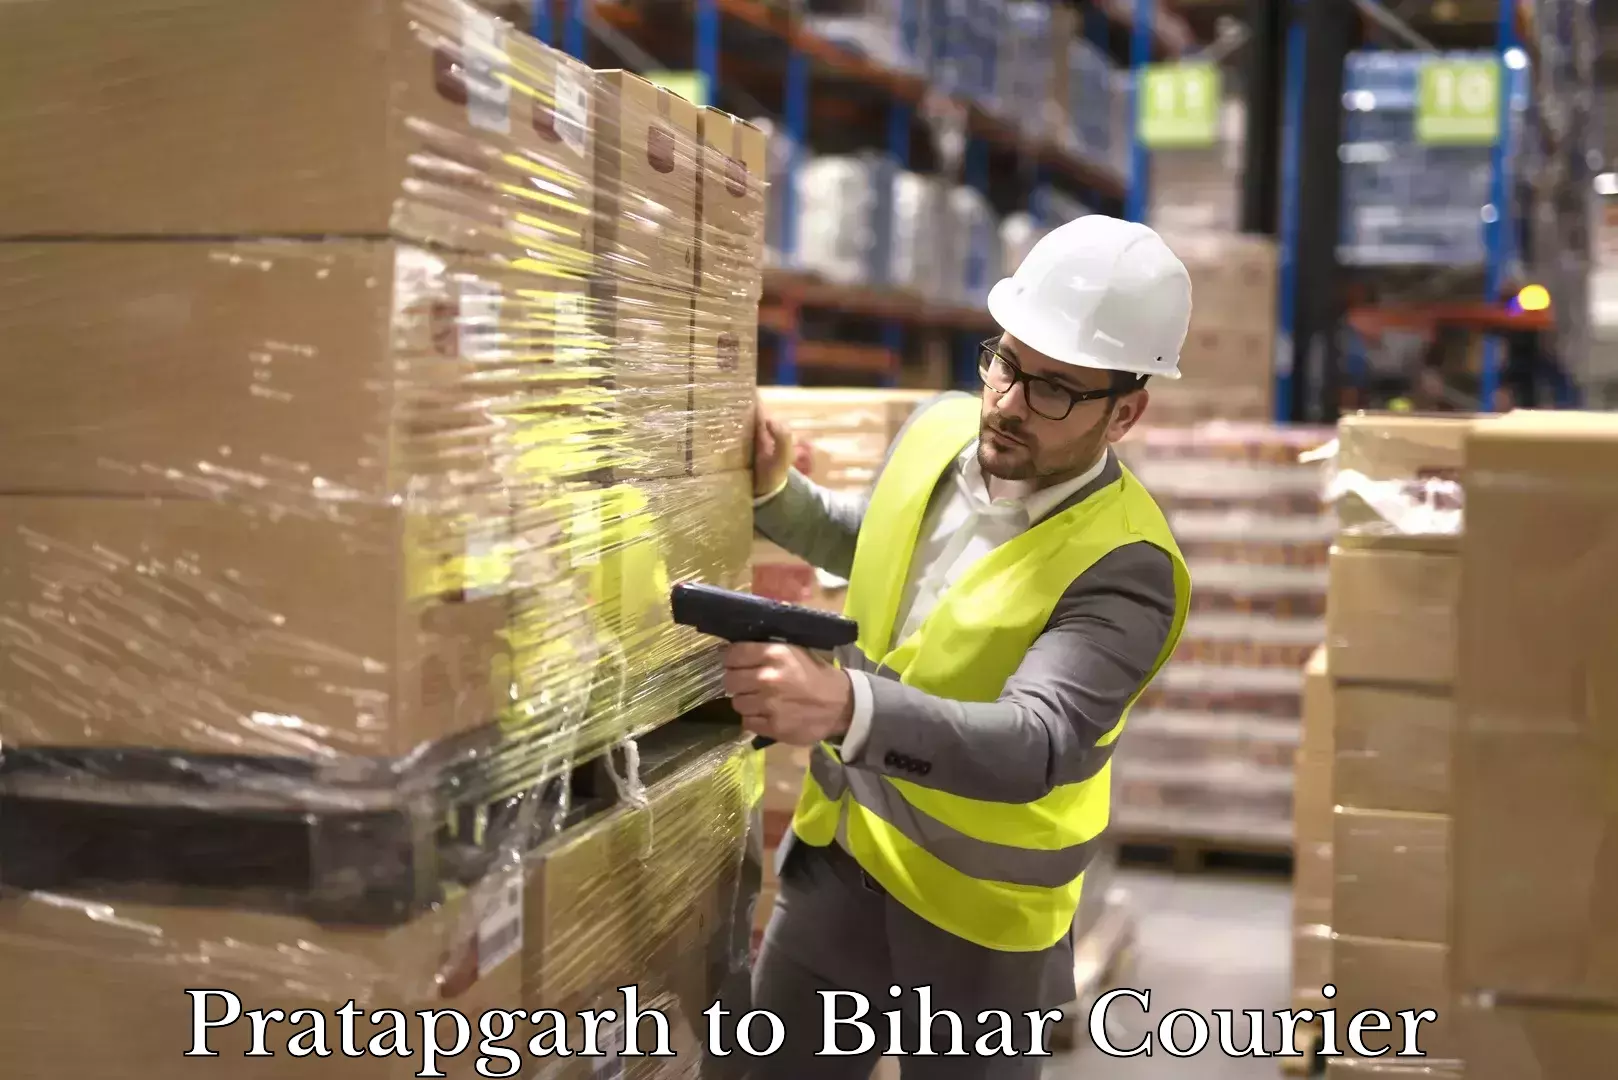 Courier service comparison Pratapgarh to Bihar